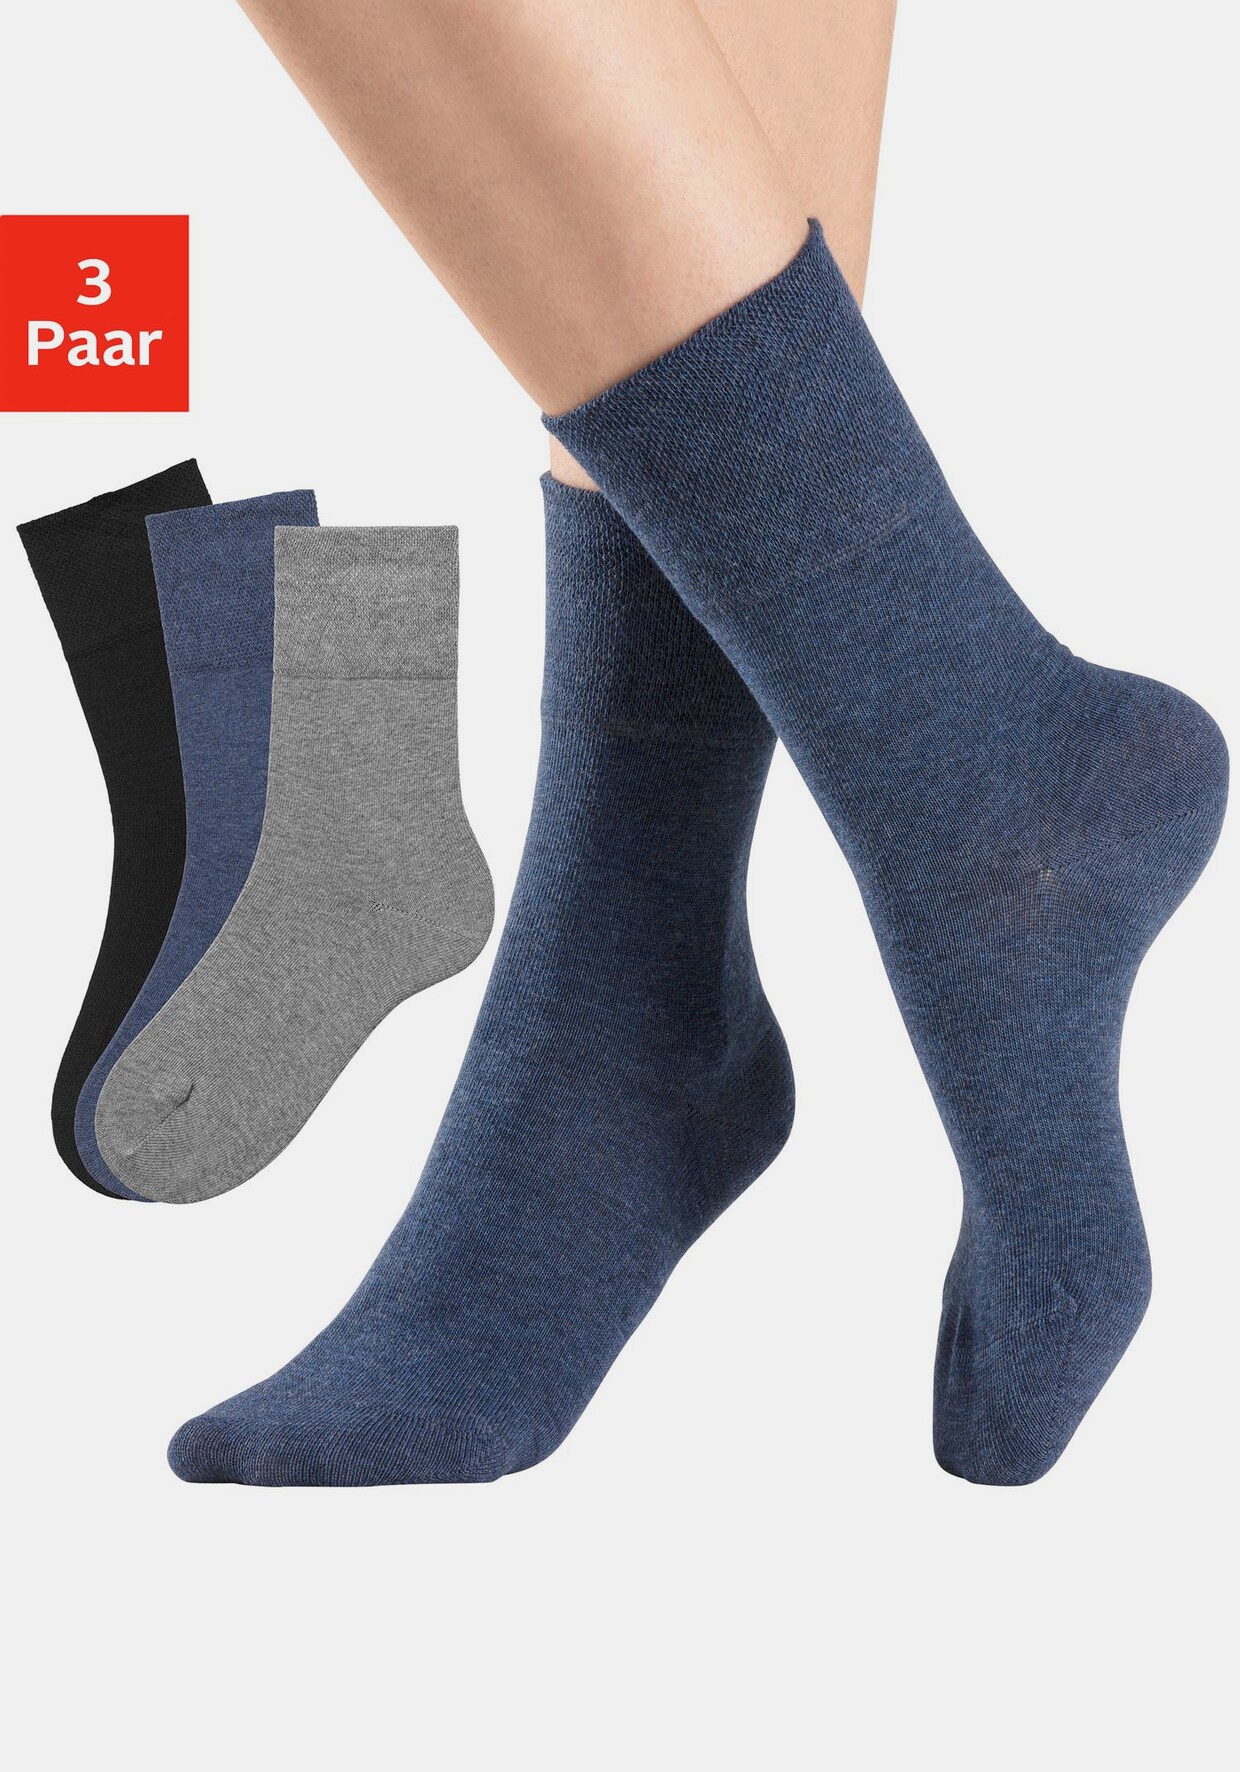 H.I.S Socken - 1x jeans + 1x schwarz + 1x grau-meliert